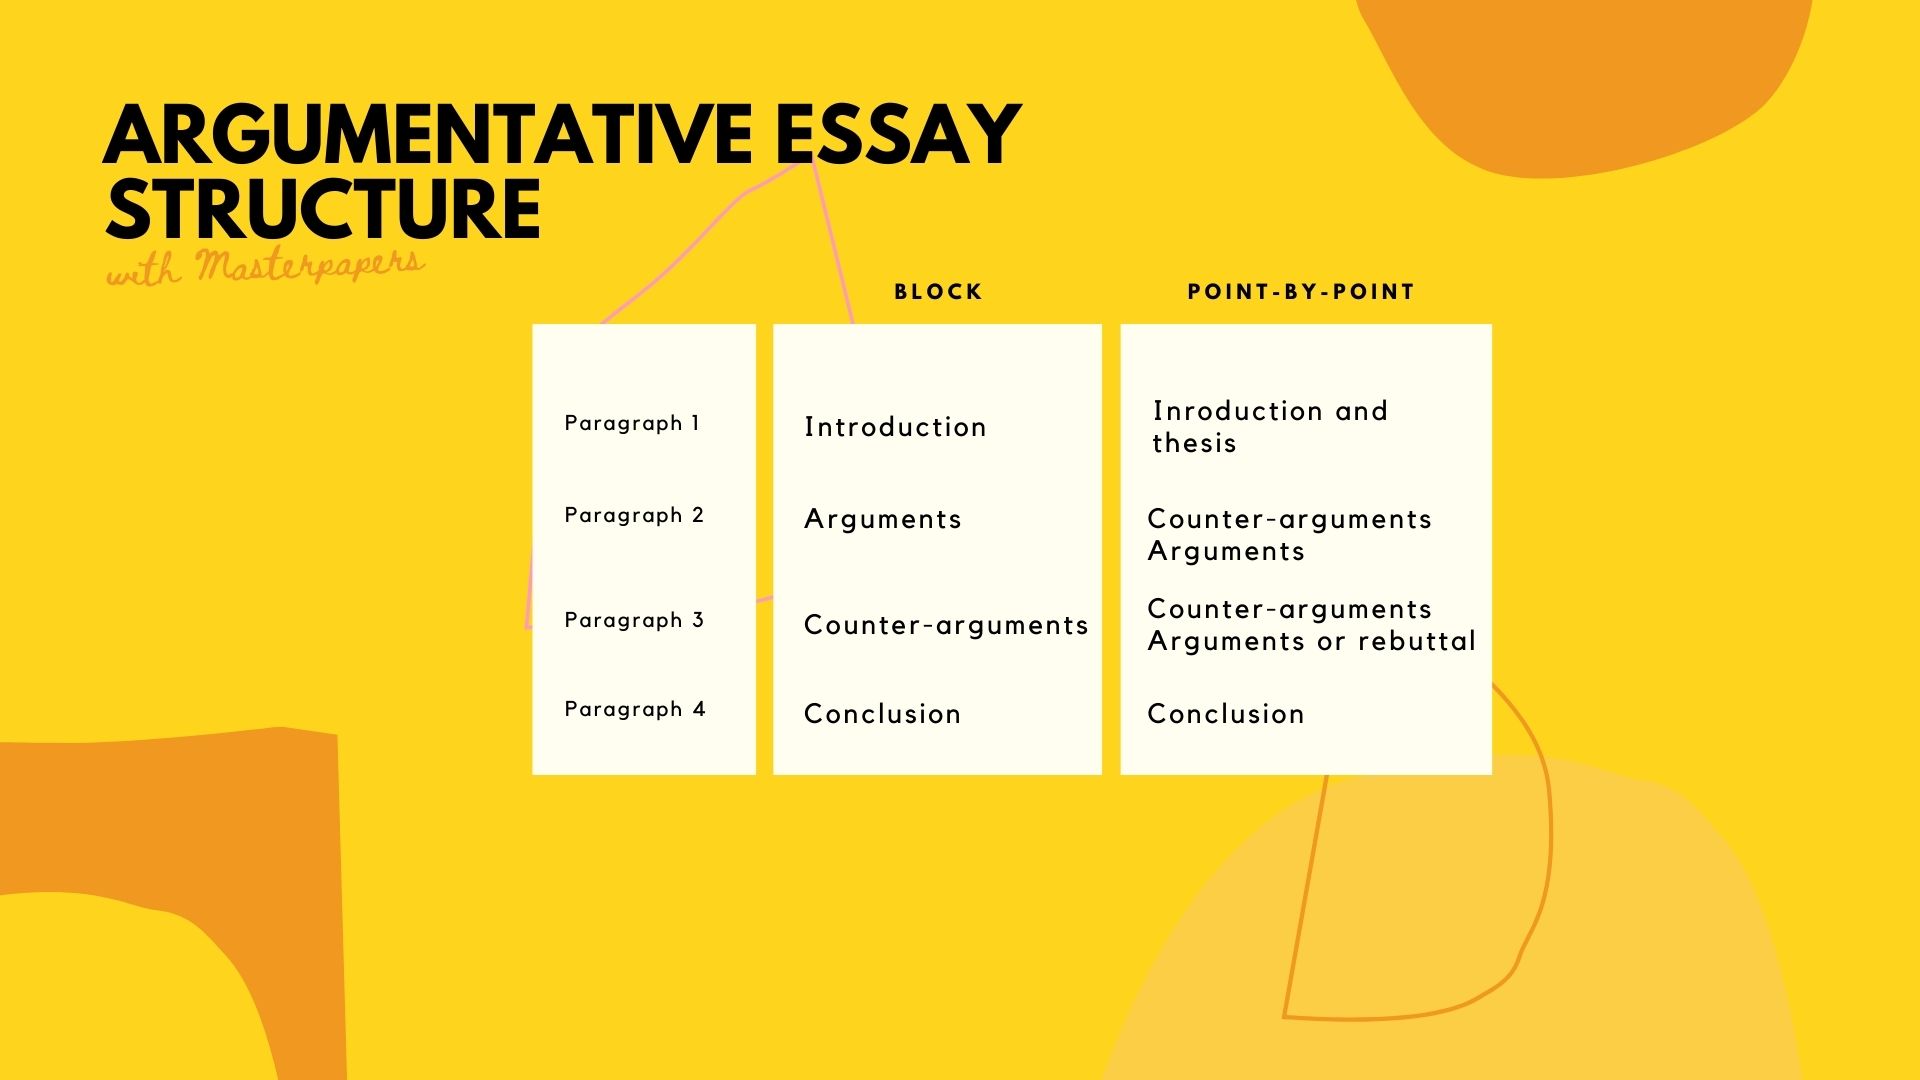 structure of argumentative essay